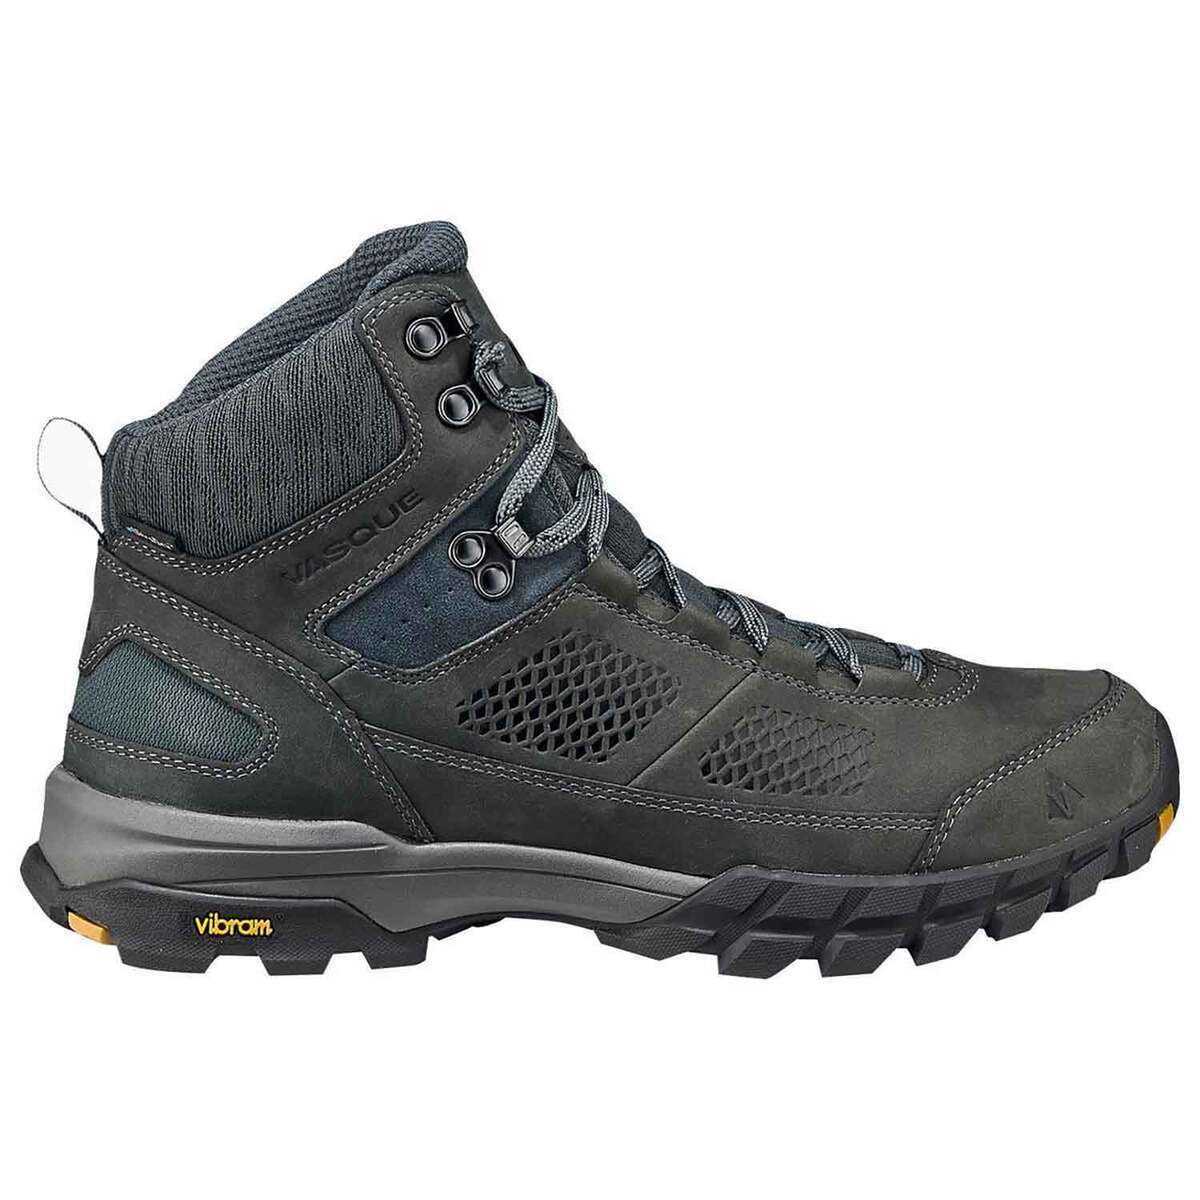 Vasque Men’s Talus AT UltraDry Waterproof Mid Hiking Boots | Sportsman ...